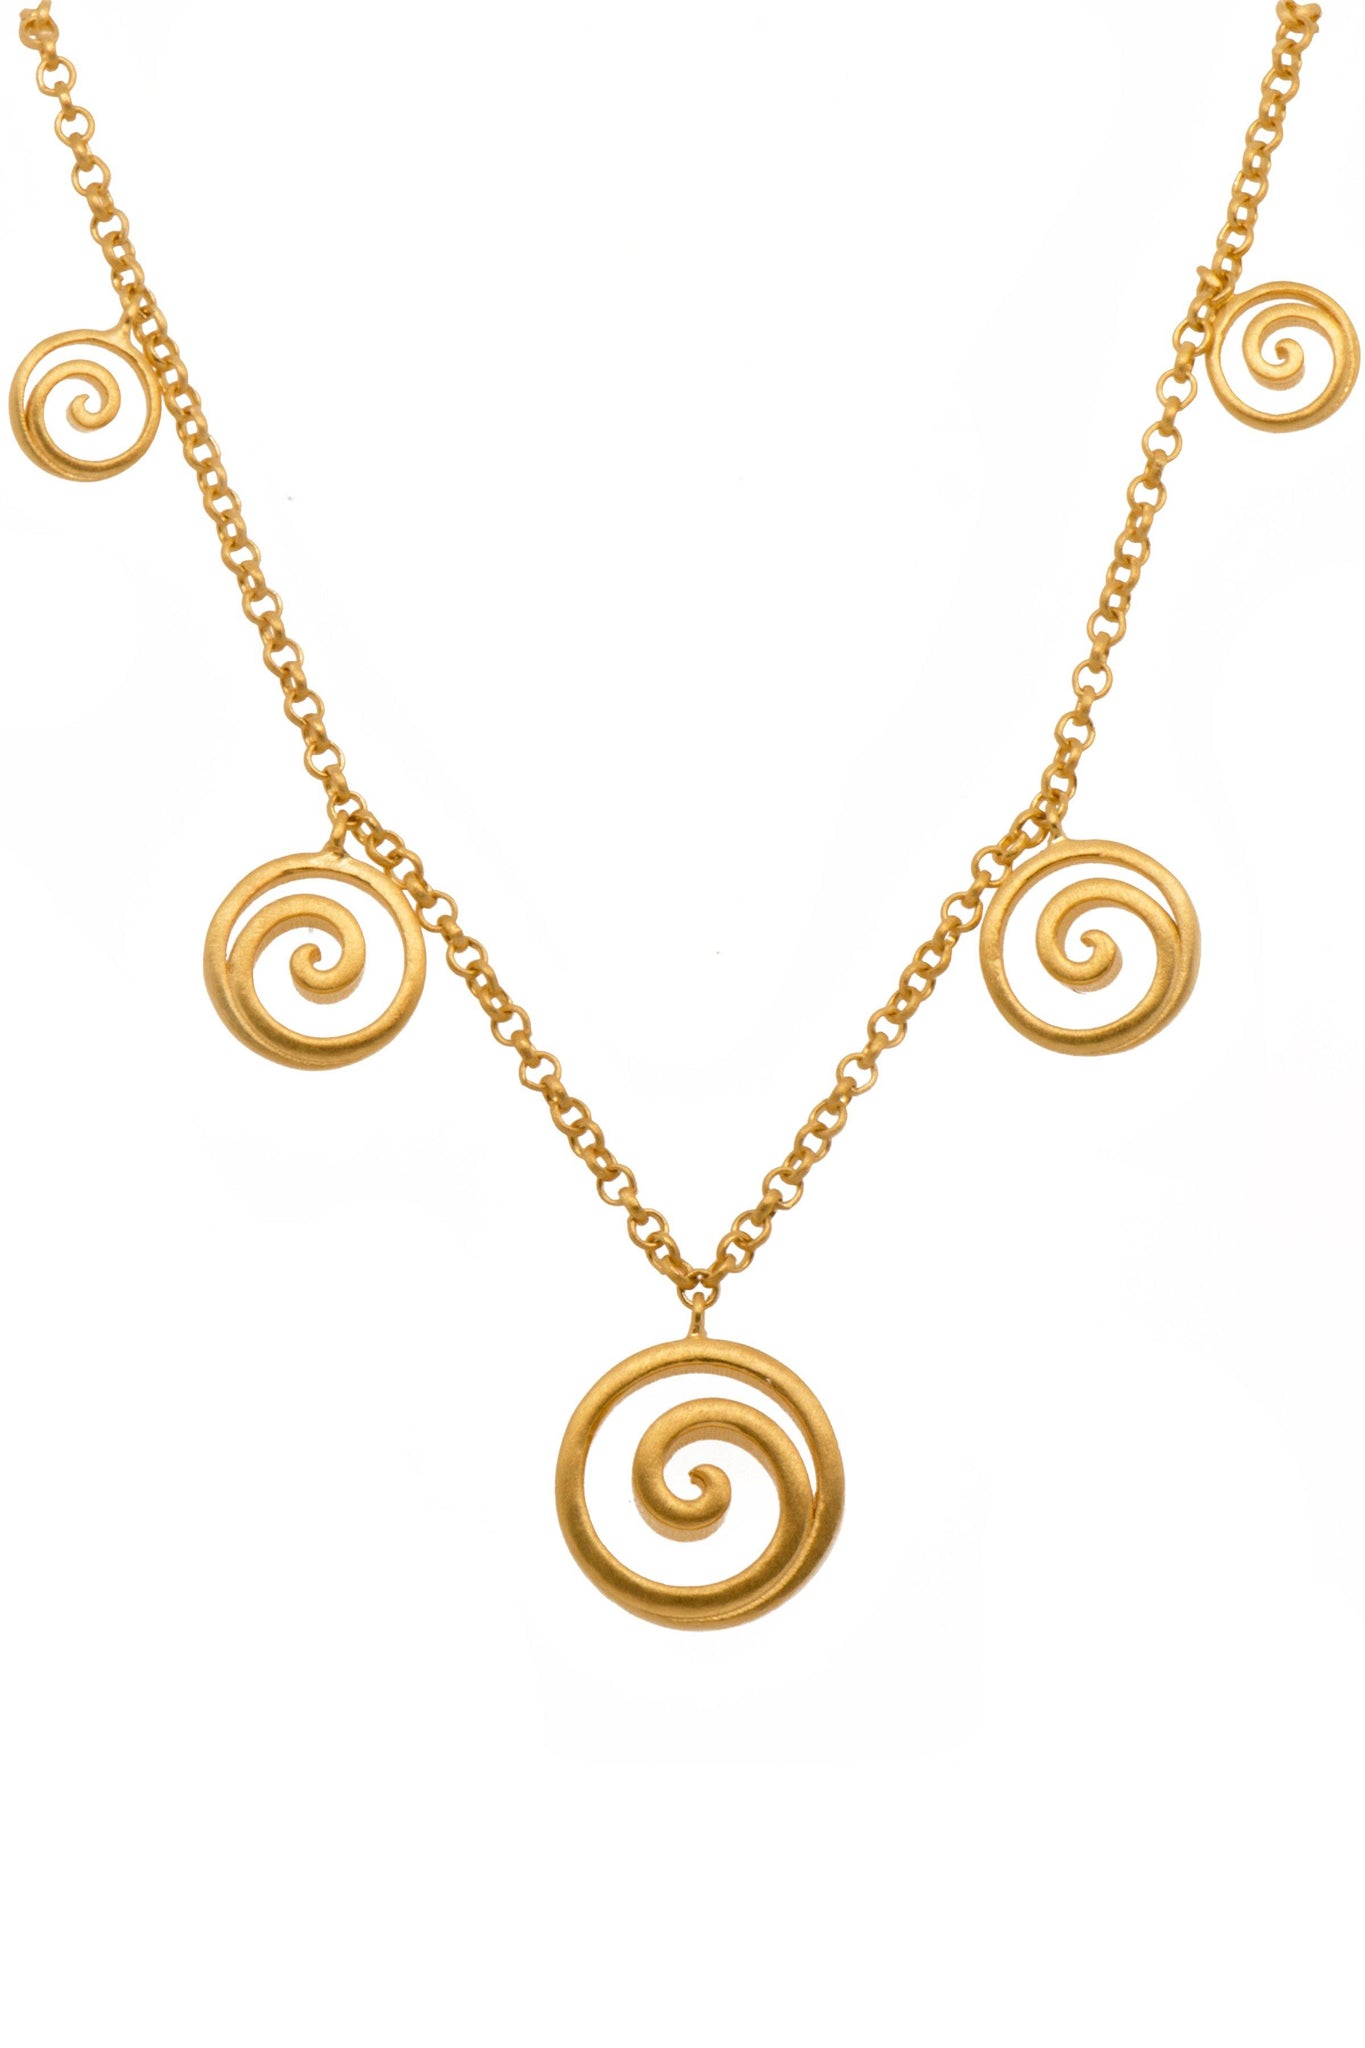 GRATITUDE GRADUATED OPEN SWIRL NECKLACE 24K GOLD VERMIL - Joyla Jewelry